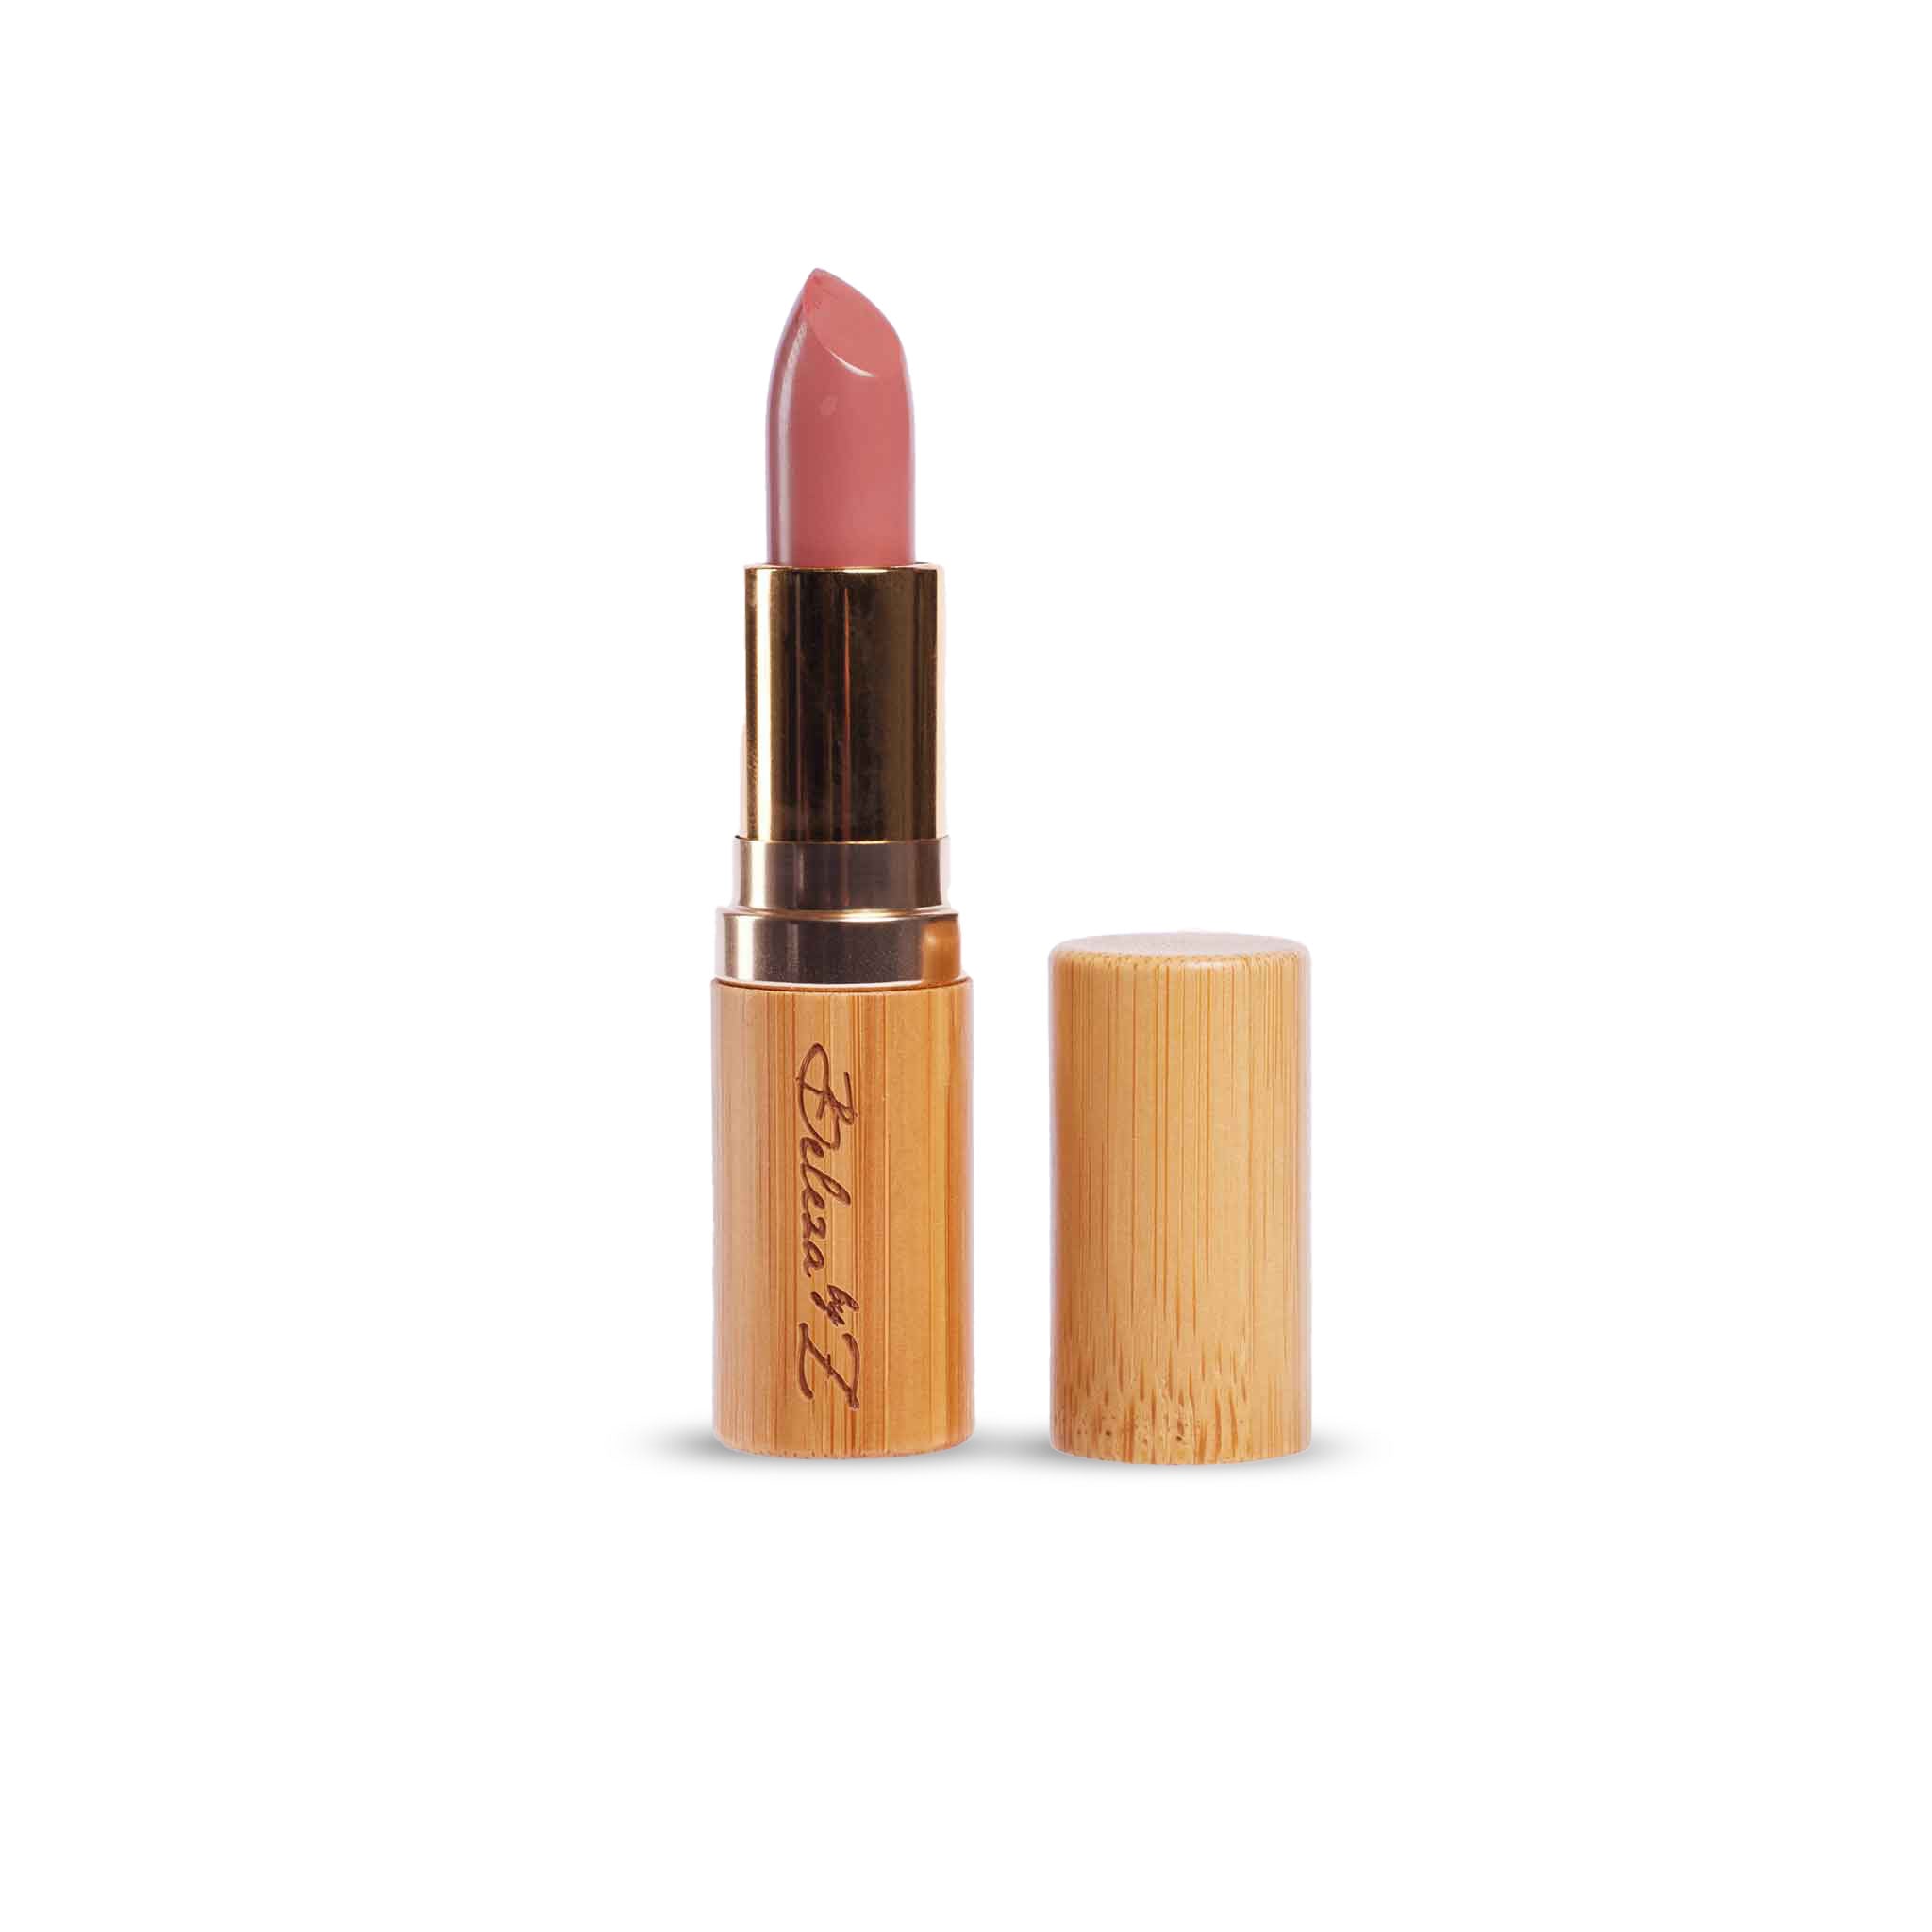 Ultra-creamy moisturizing lipstick in color Down to Earth